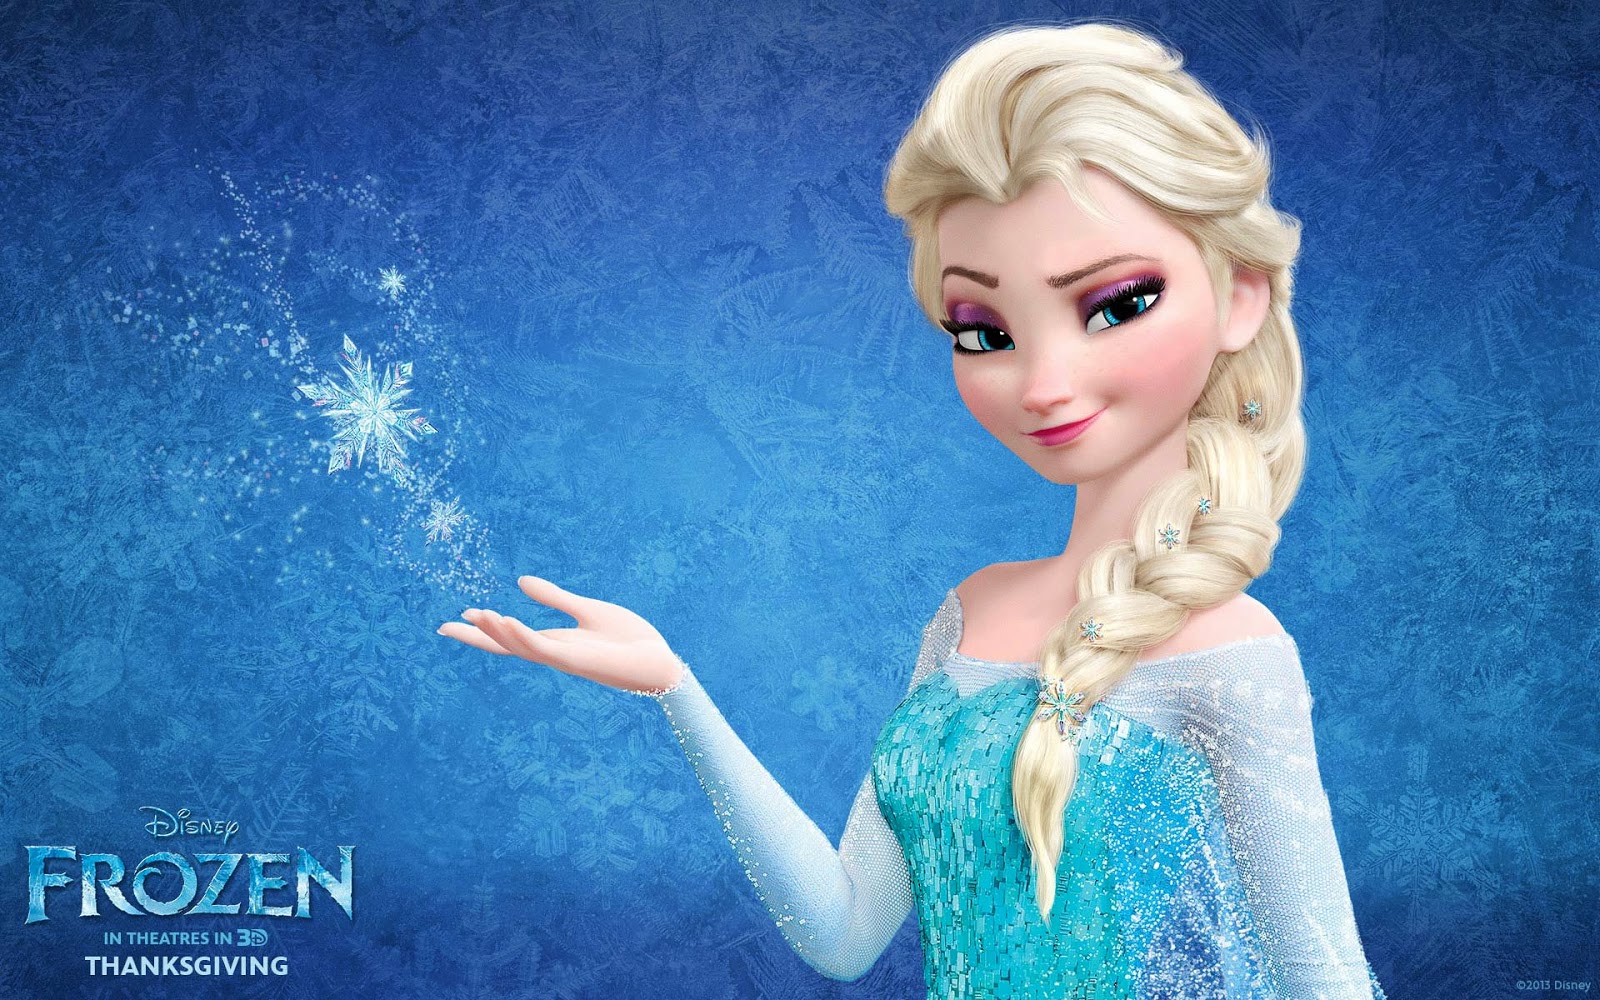 Elsa From Frozen Wallpaper  33 Magical Disney Wallpapers For Your Phone   POPSUGAR Tech Photo 18